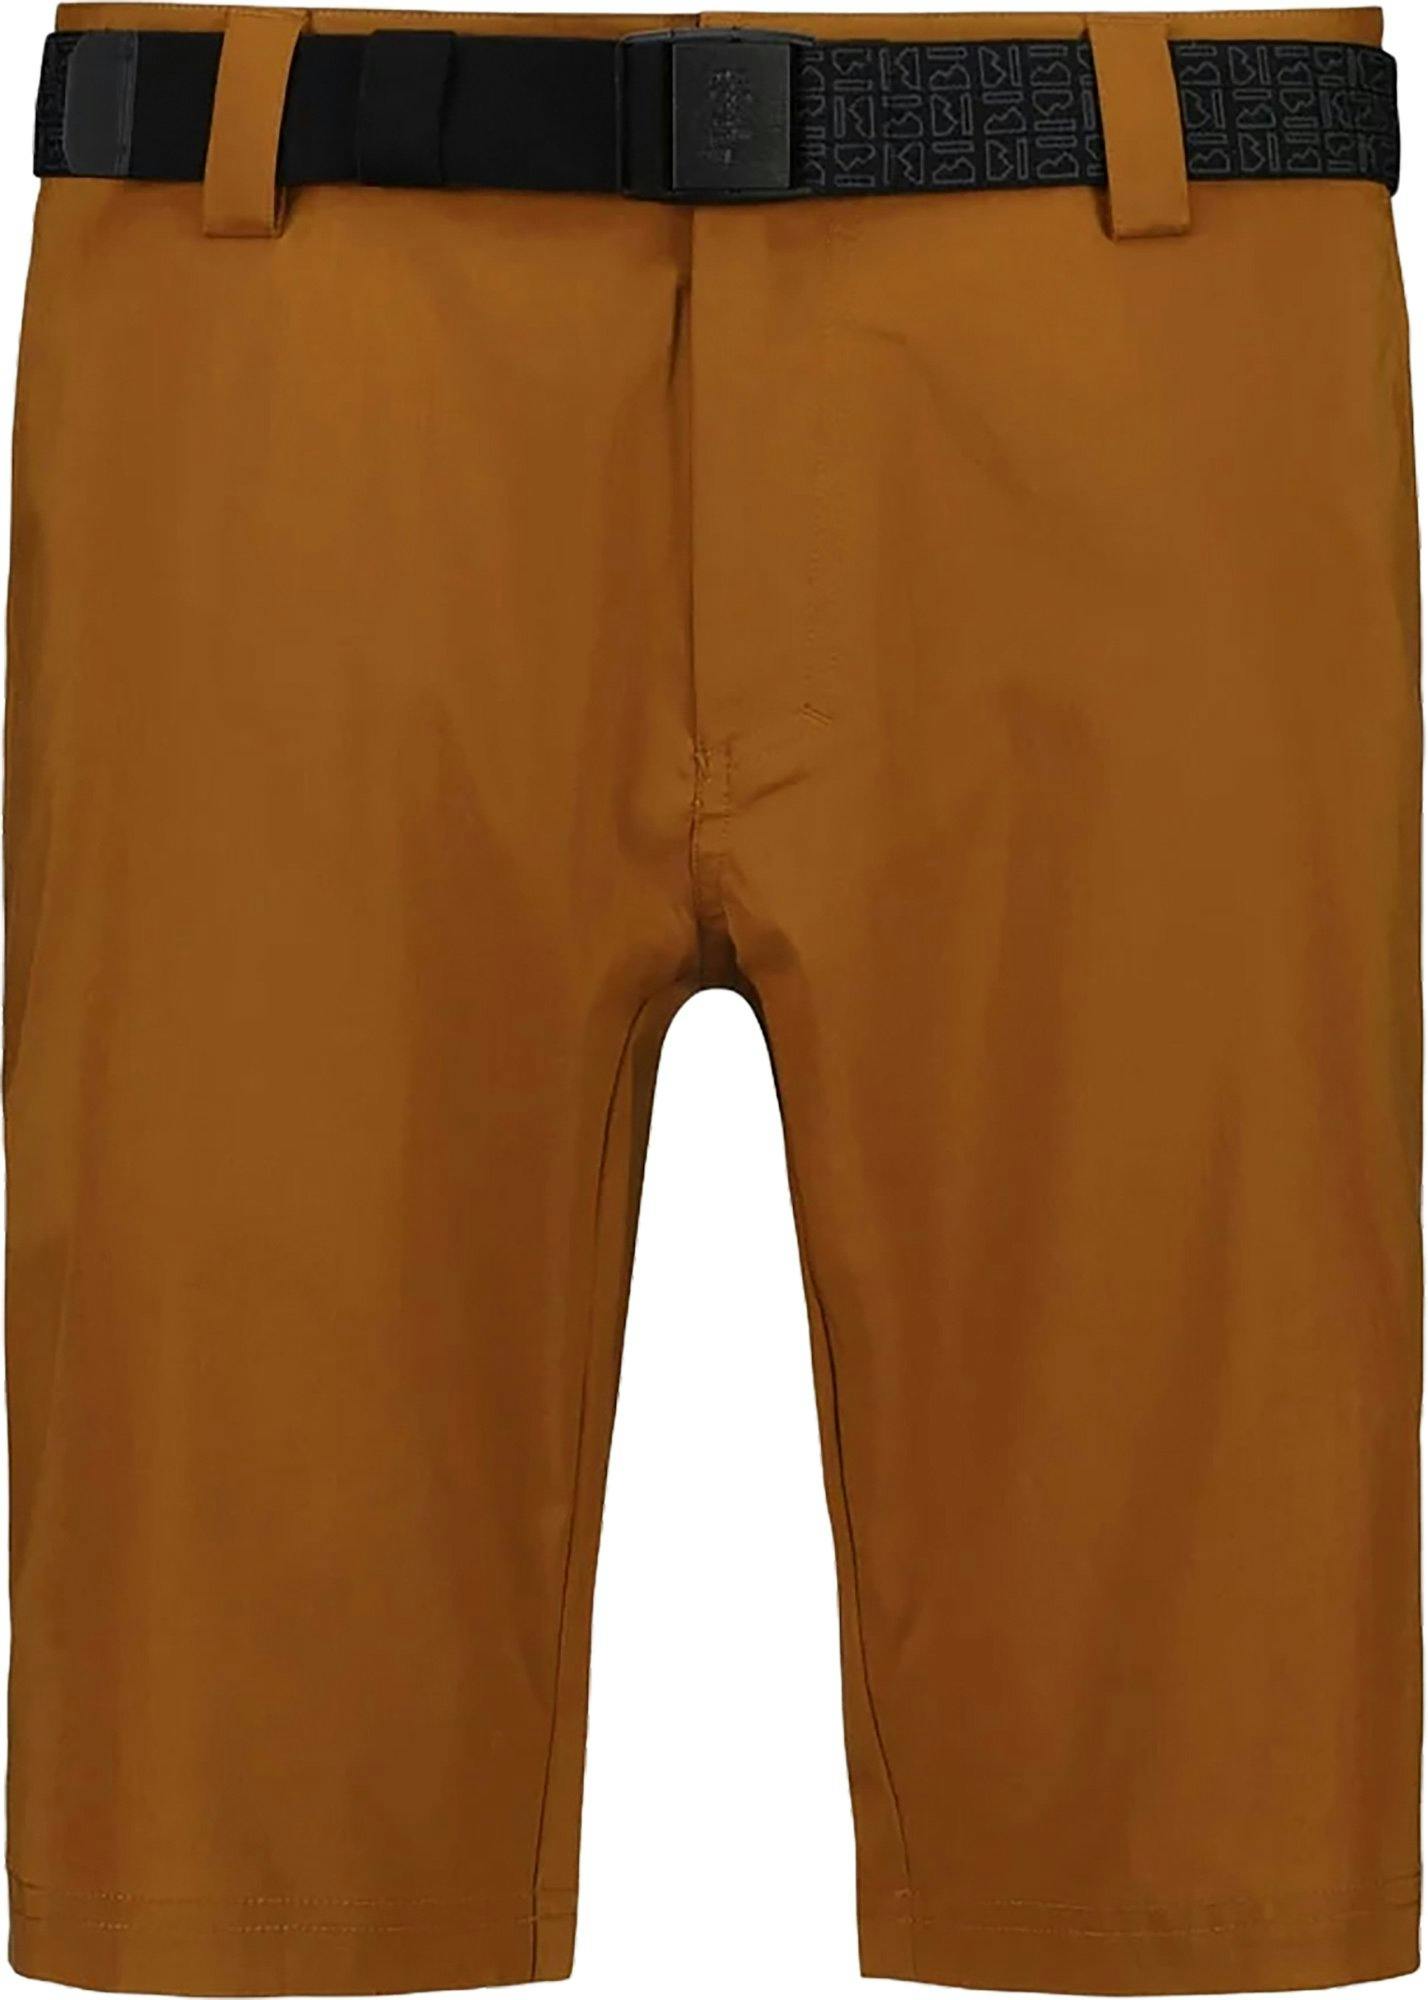 Product image for Drift Shorts - Men's